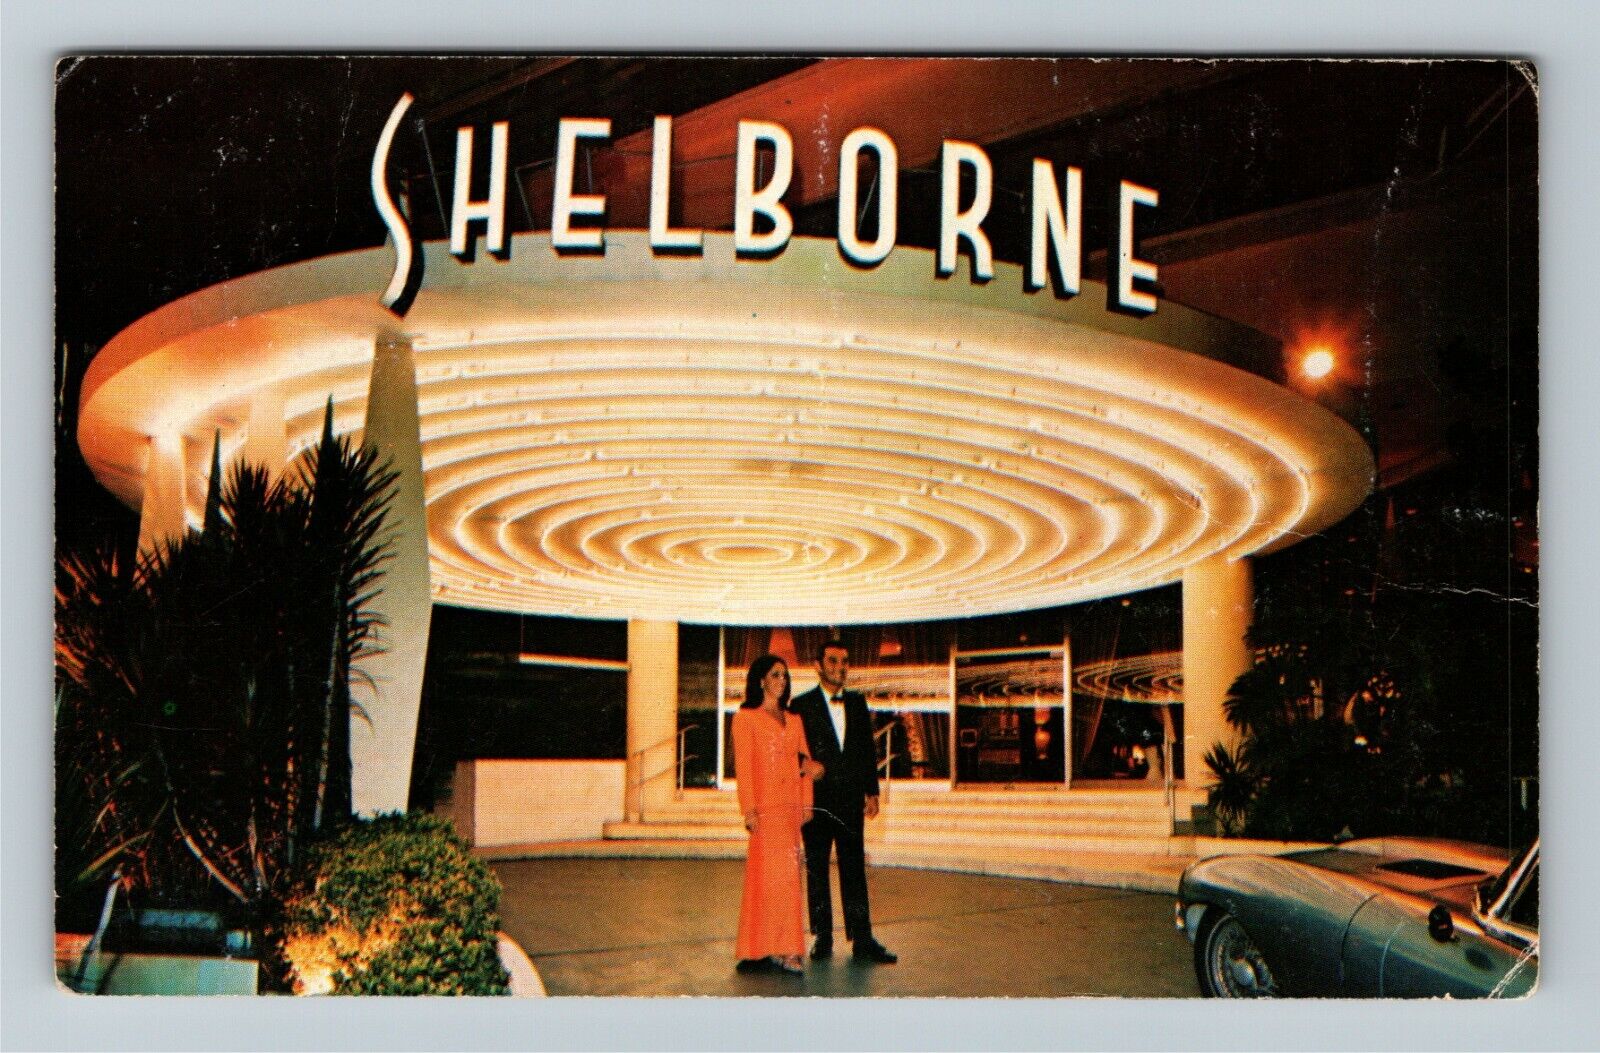 Miami Beach FL-Florida, The Shelborne, Antique Vintage Souvenir Postcard